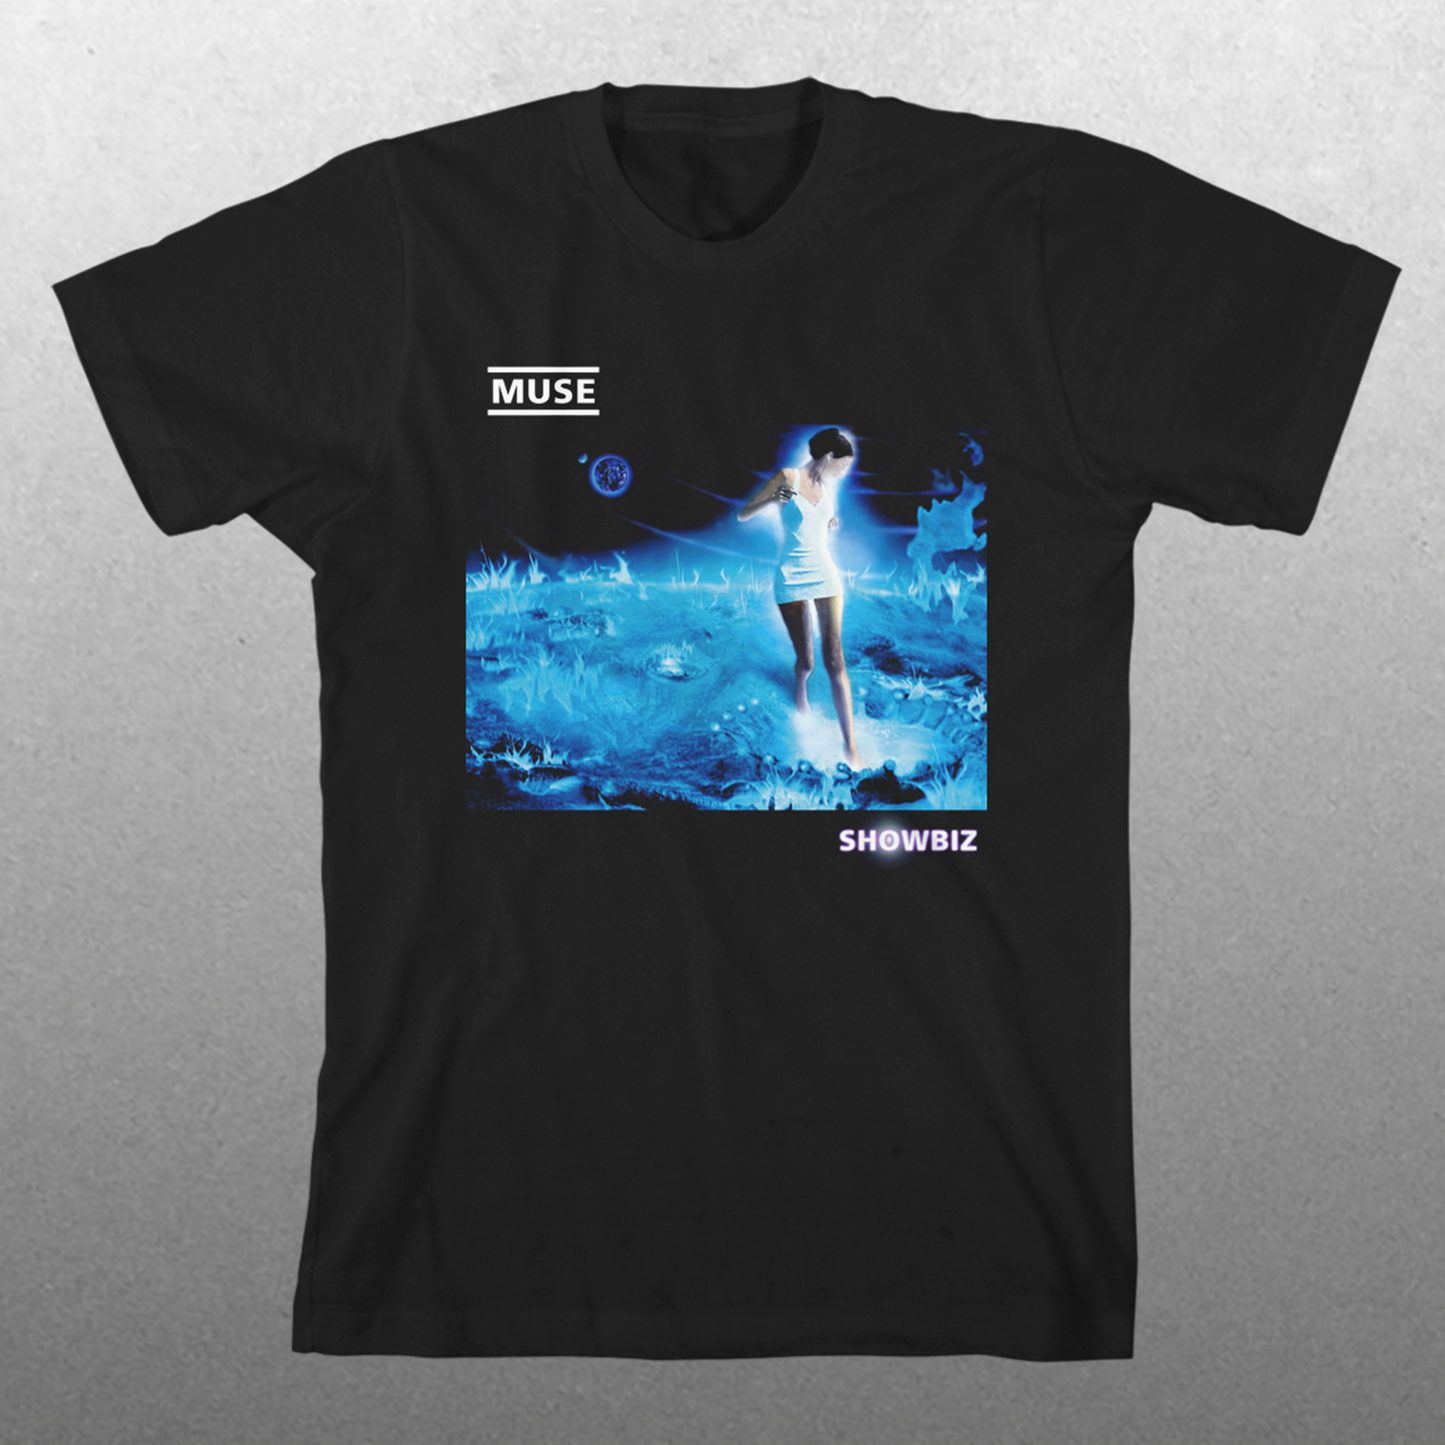 Showbiz Album Art T-Shirt